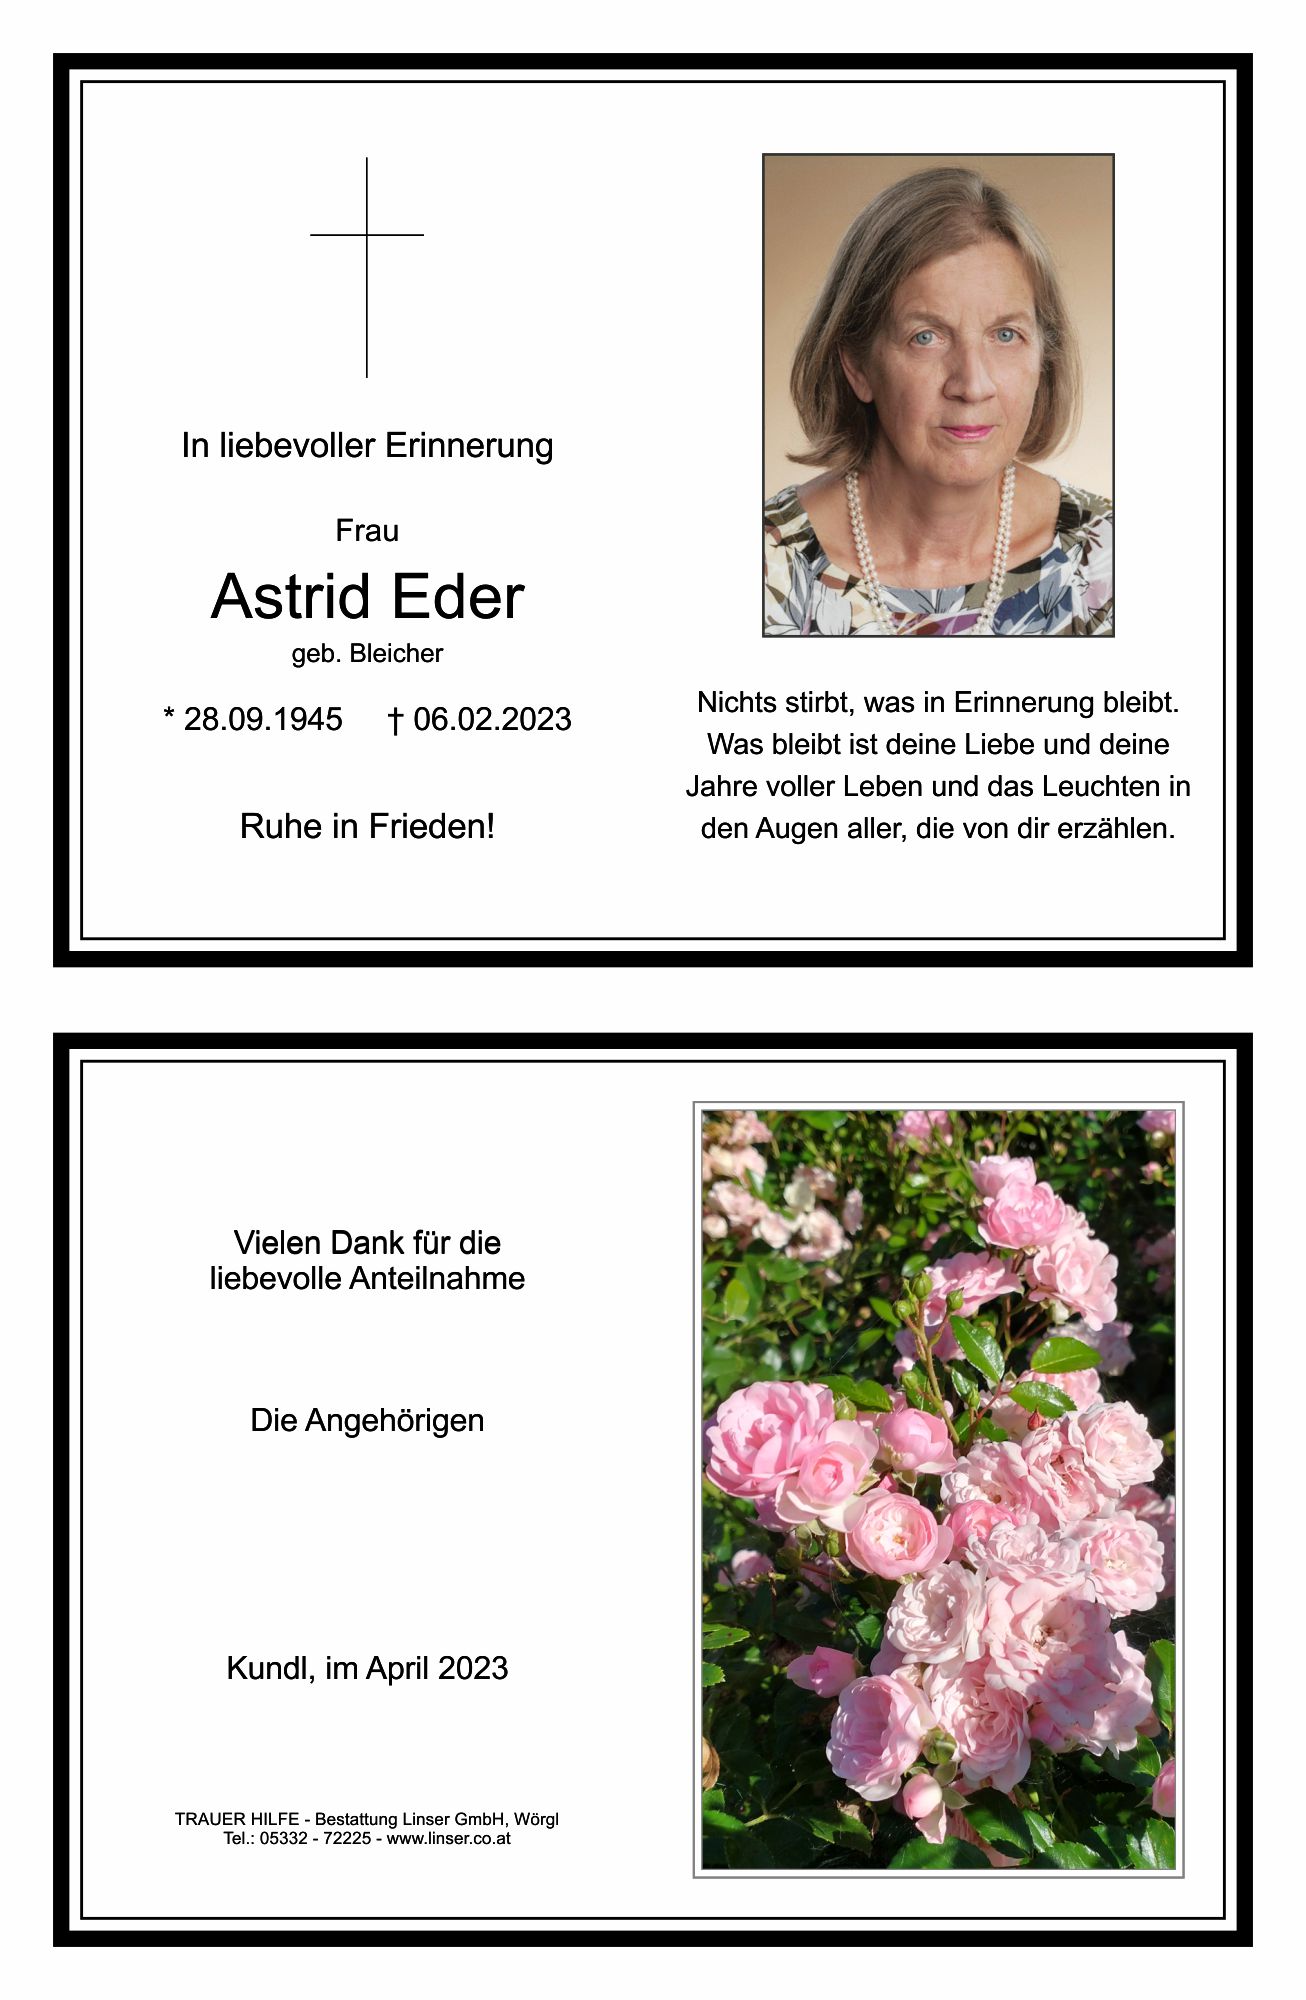 Astrid Eder